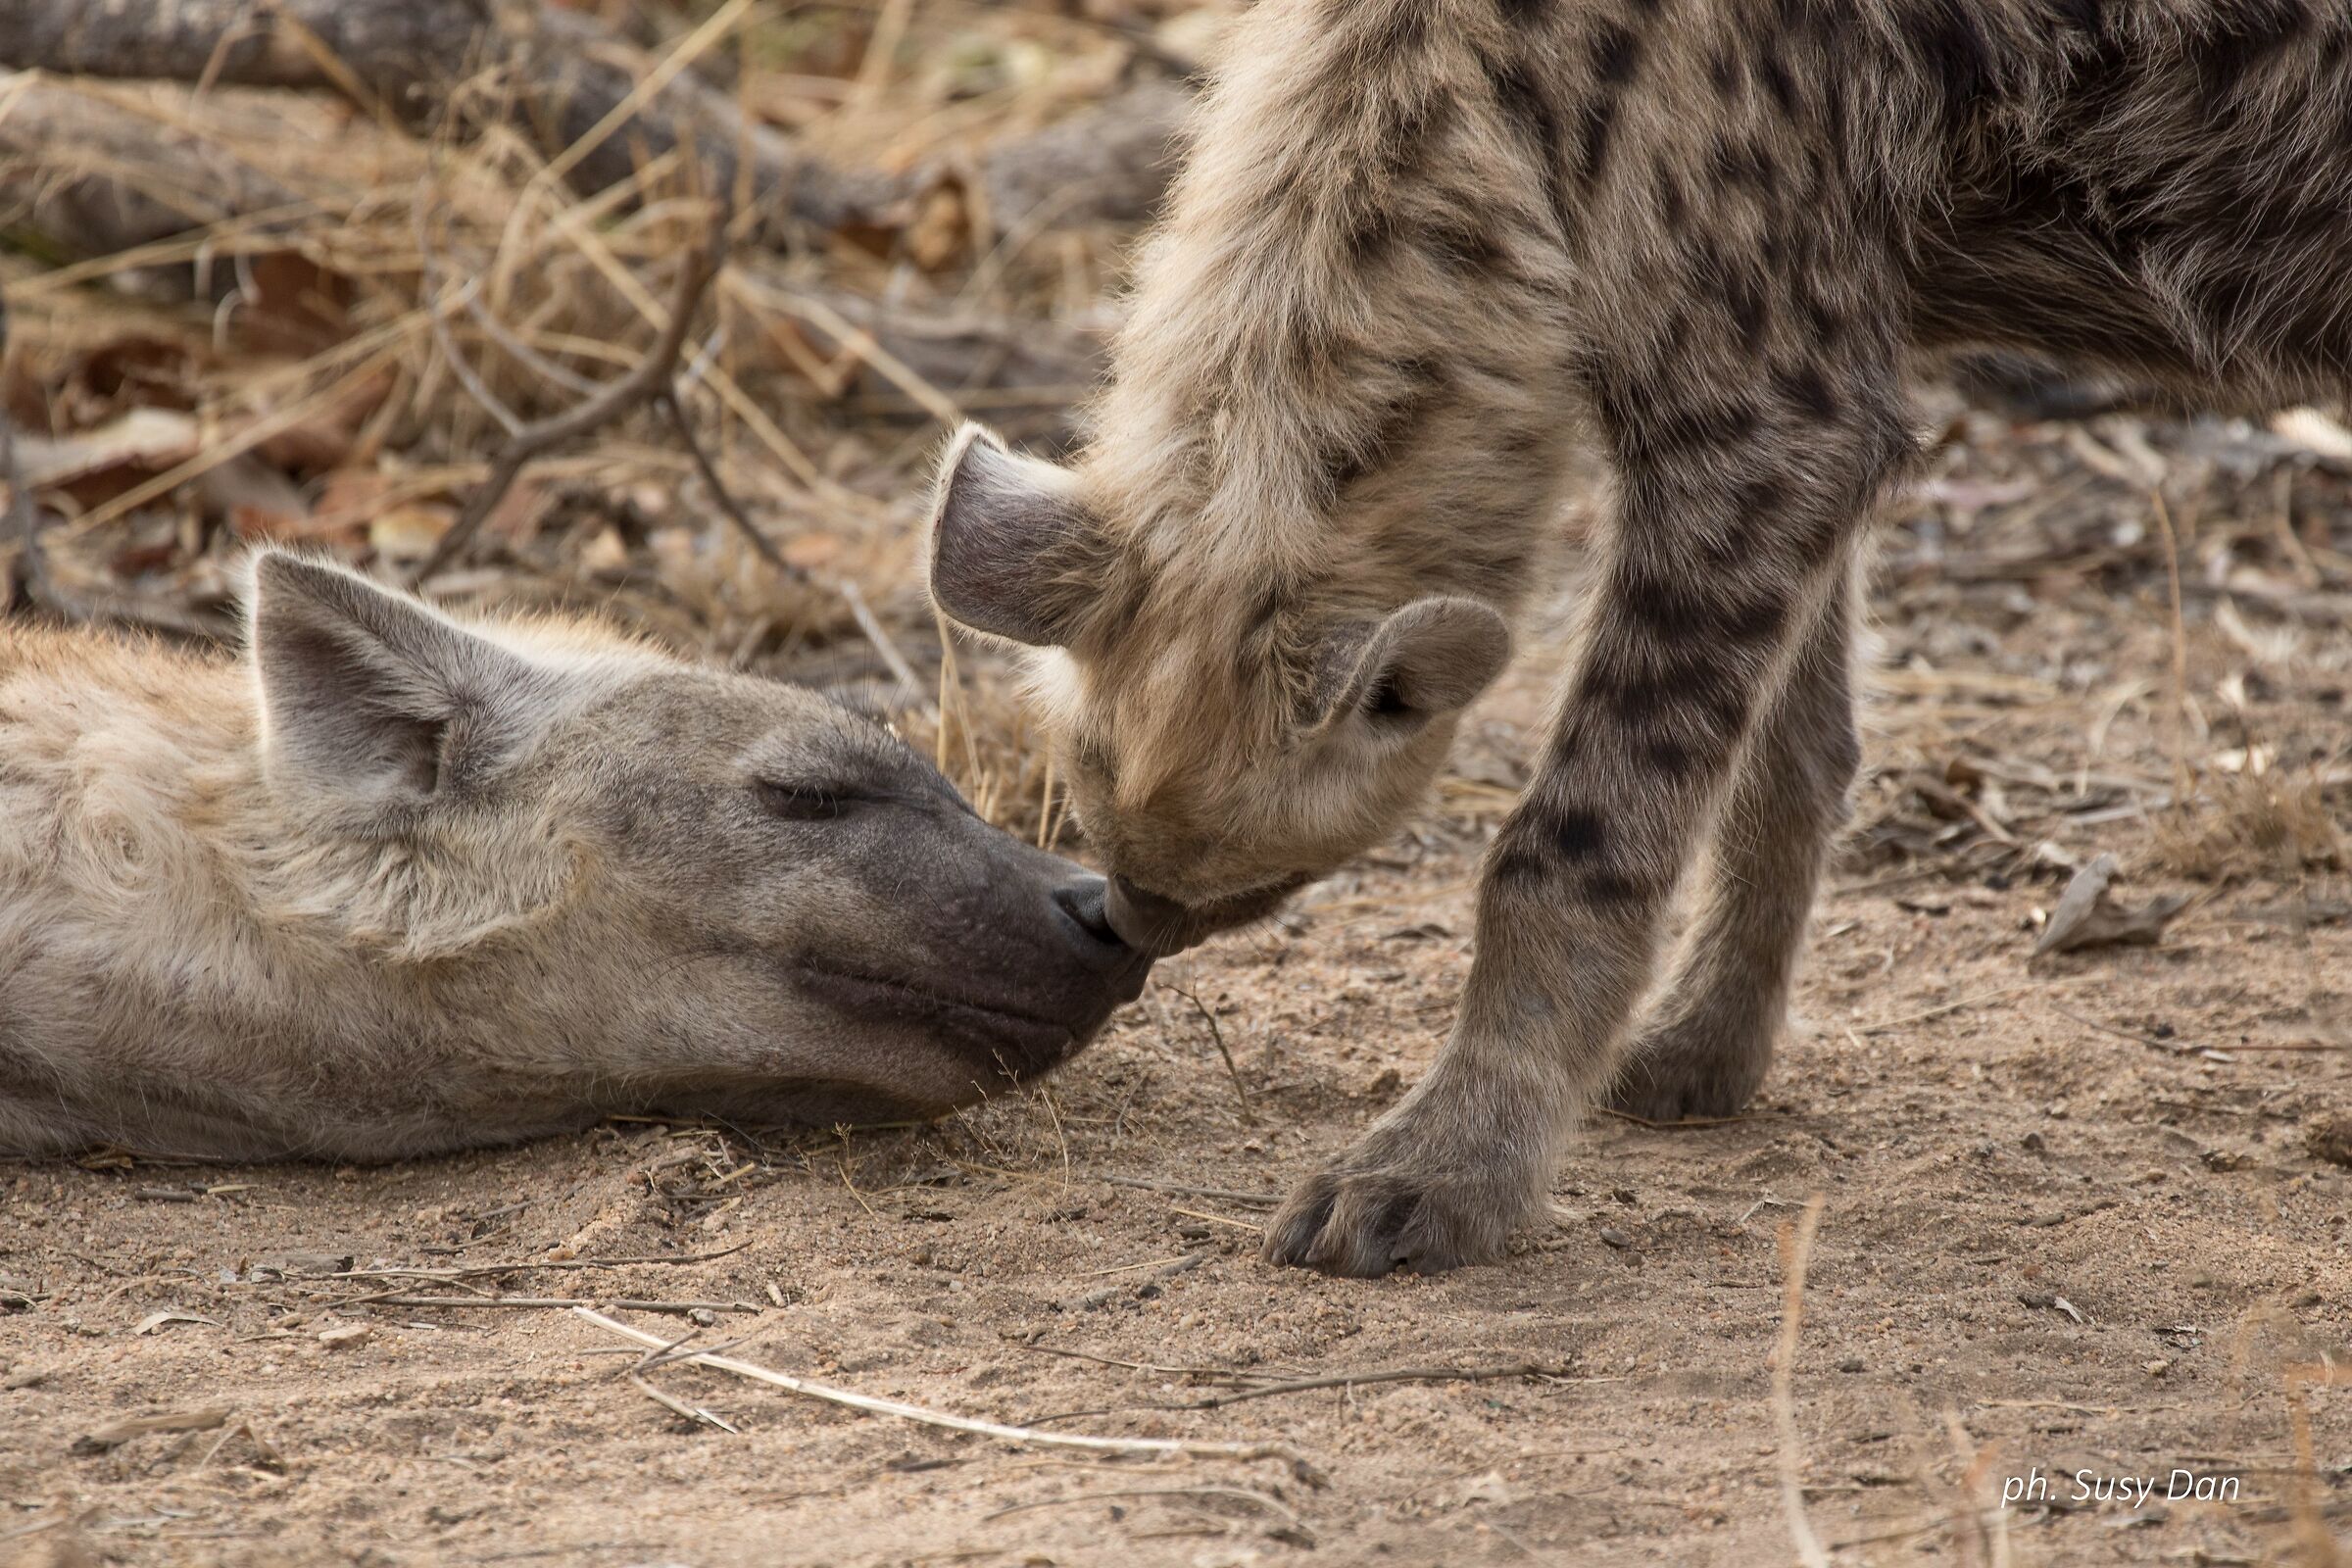 The sweetness of the hyena...